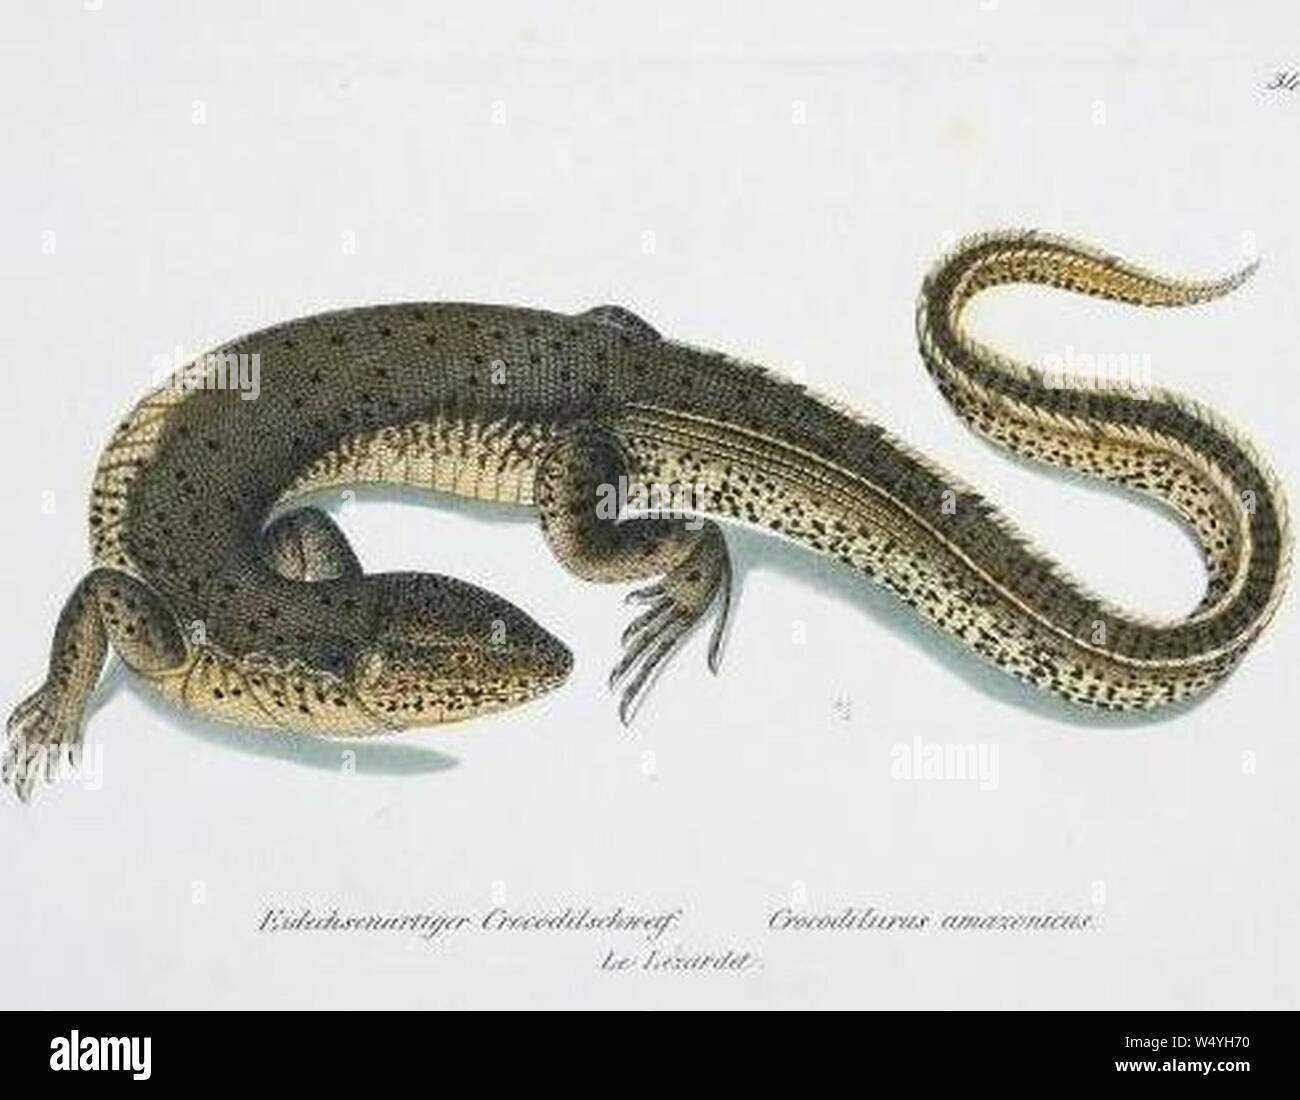 Crocodilurus amazonicus. Foto de stock